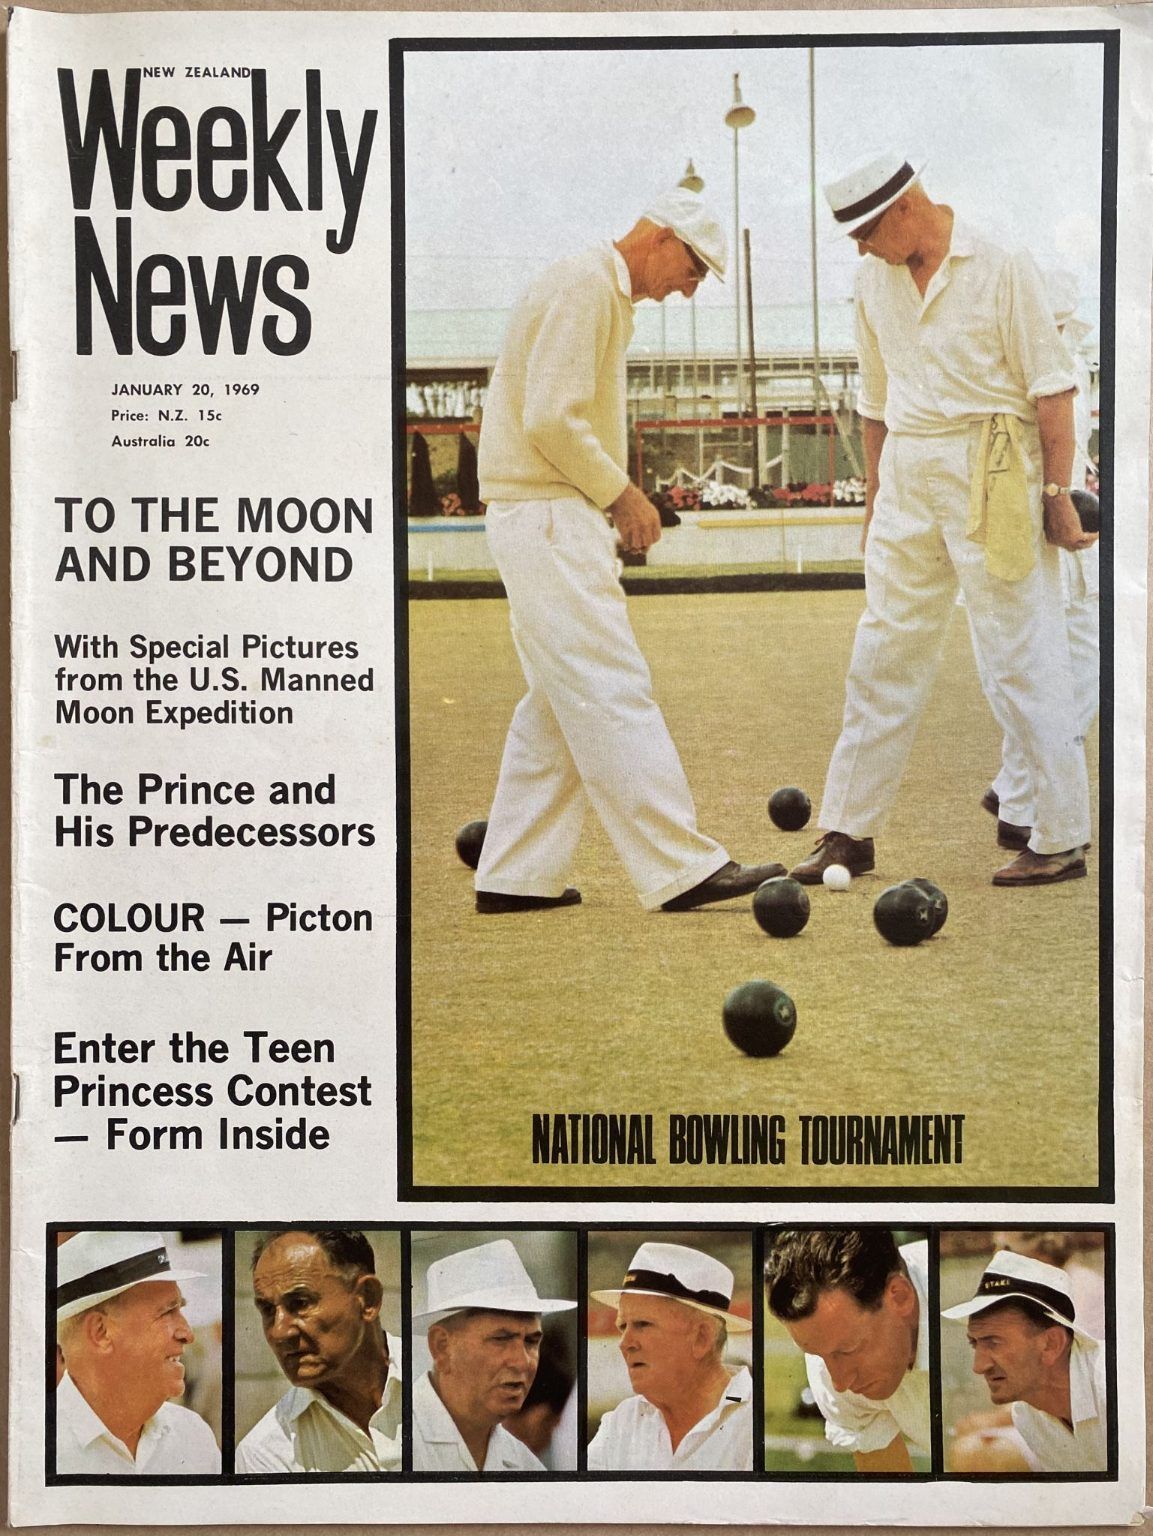 OLD NEWSPAPER: New Zealand Weekly News, 20 January 1969